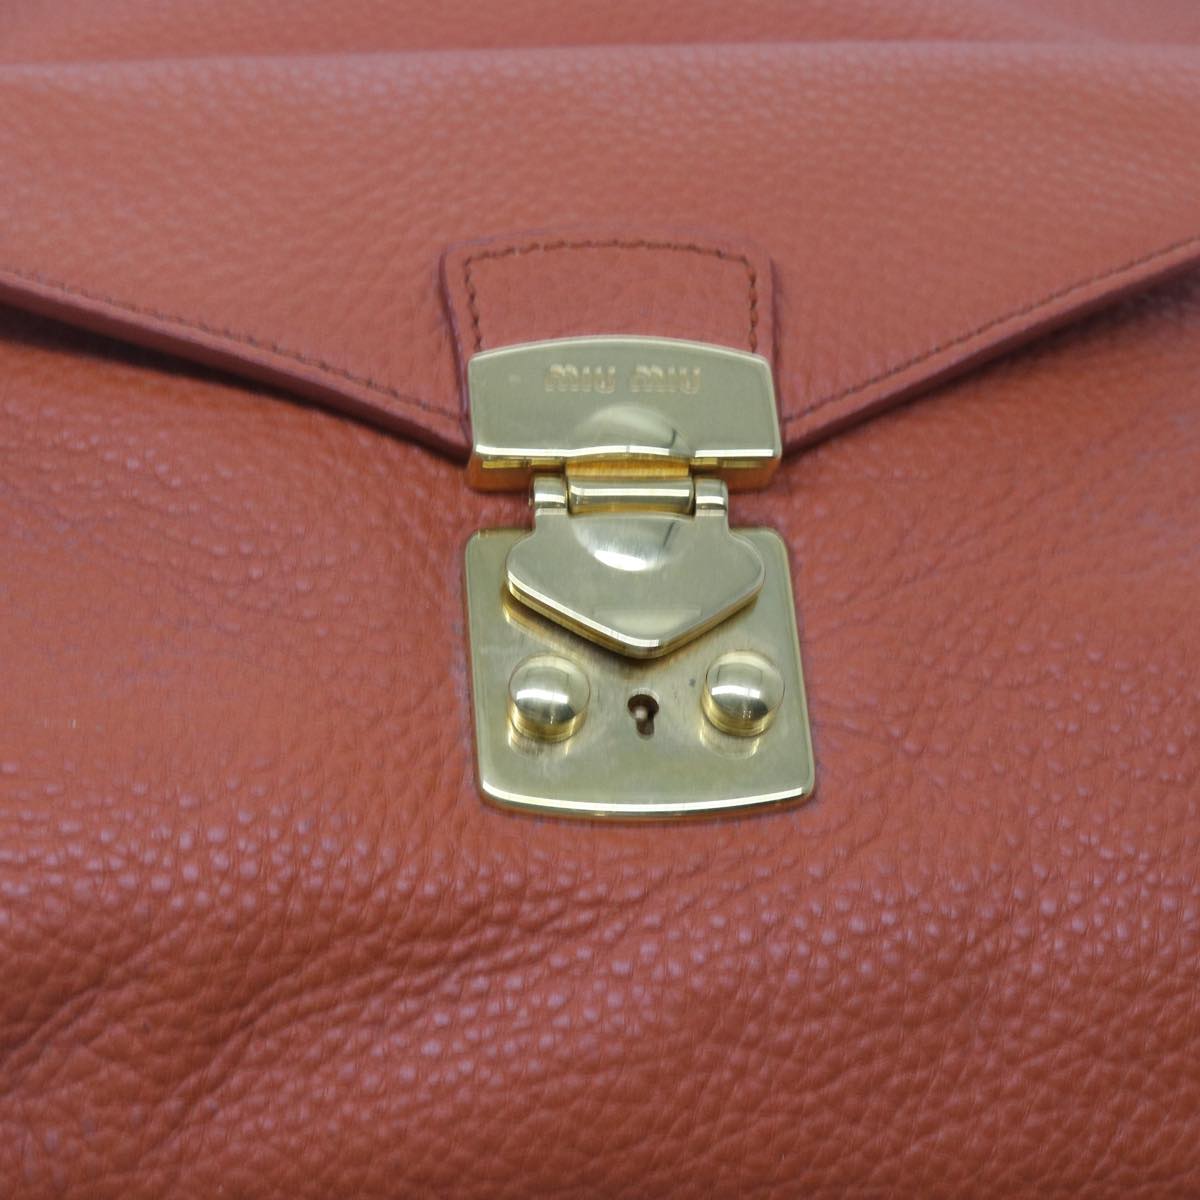 Miu Miu Shoulder Bag Leather Orange Auth am5446